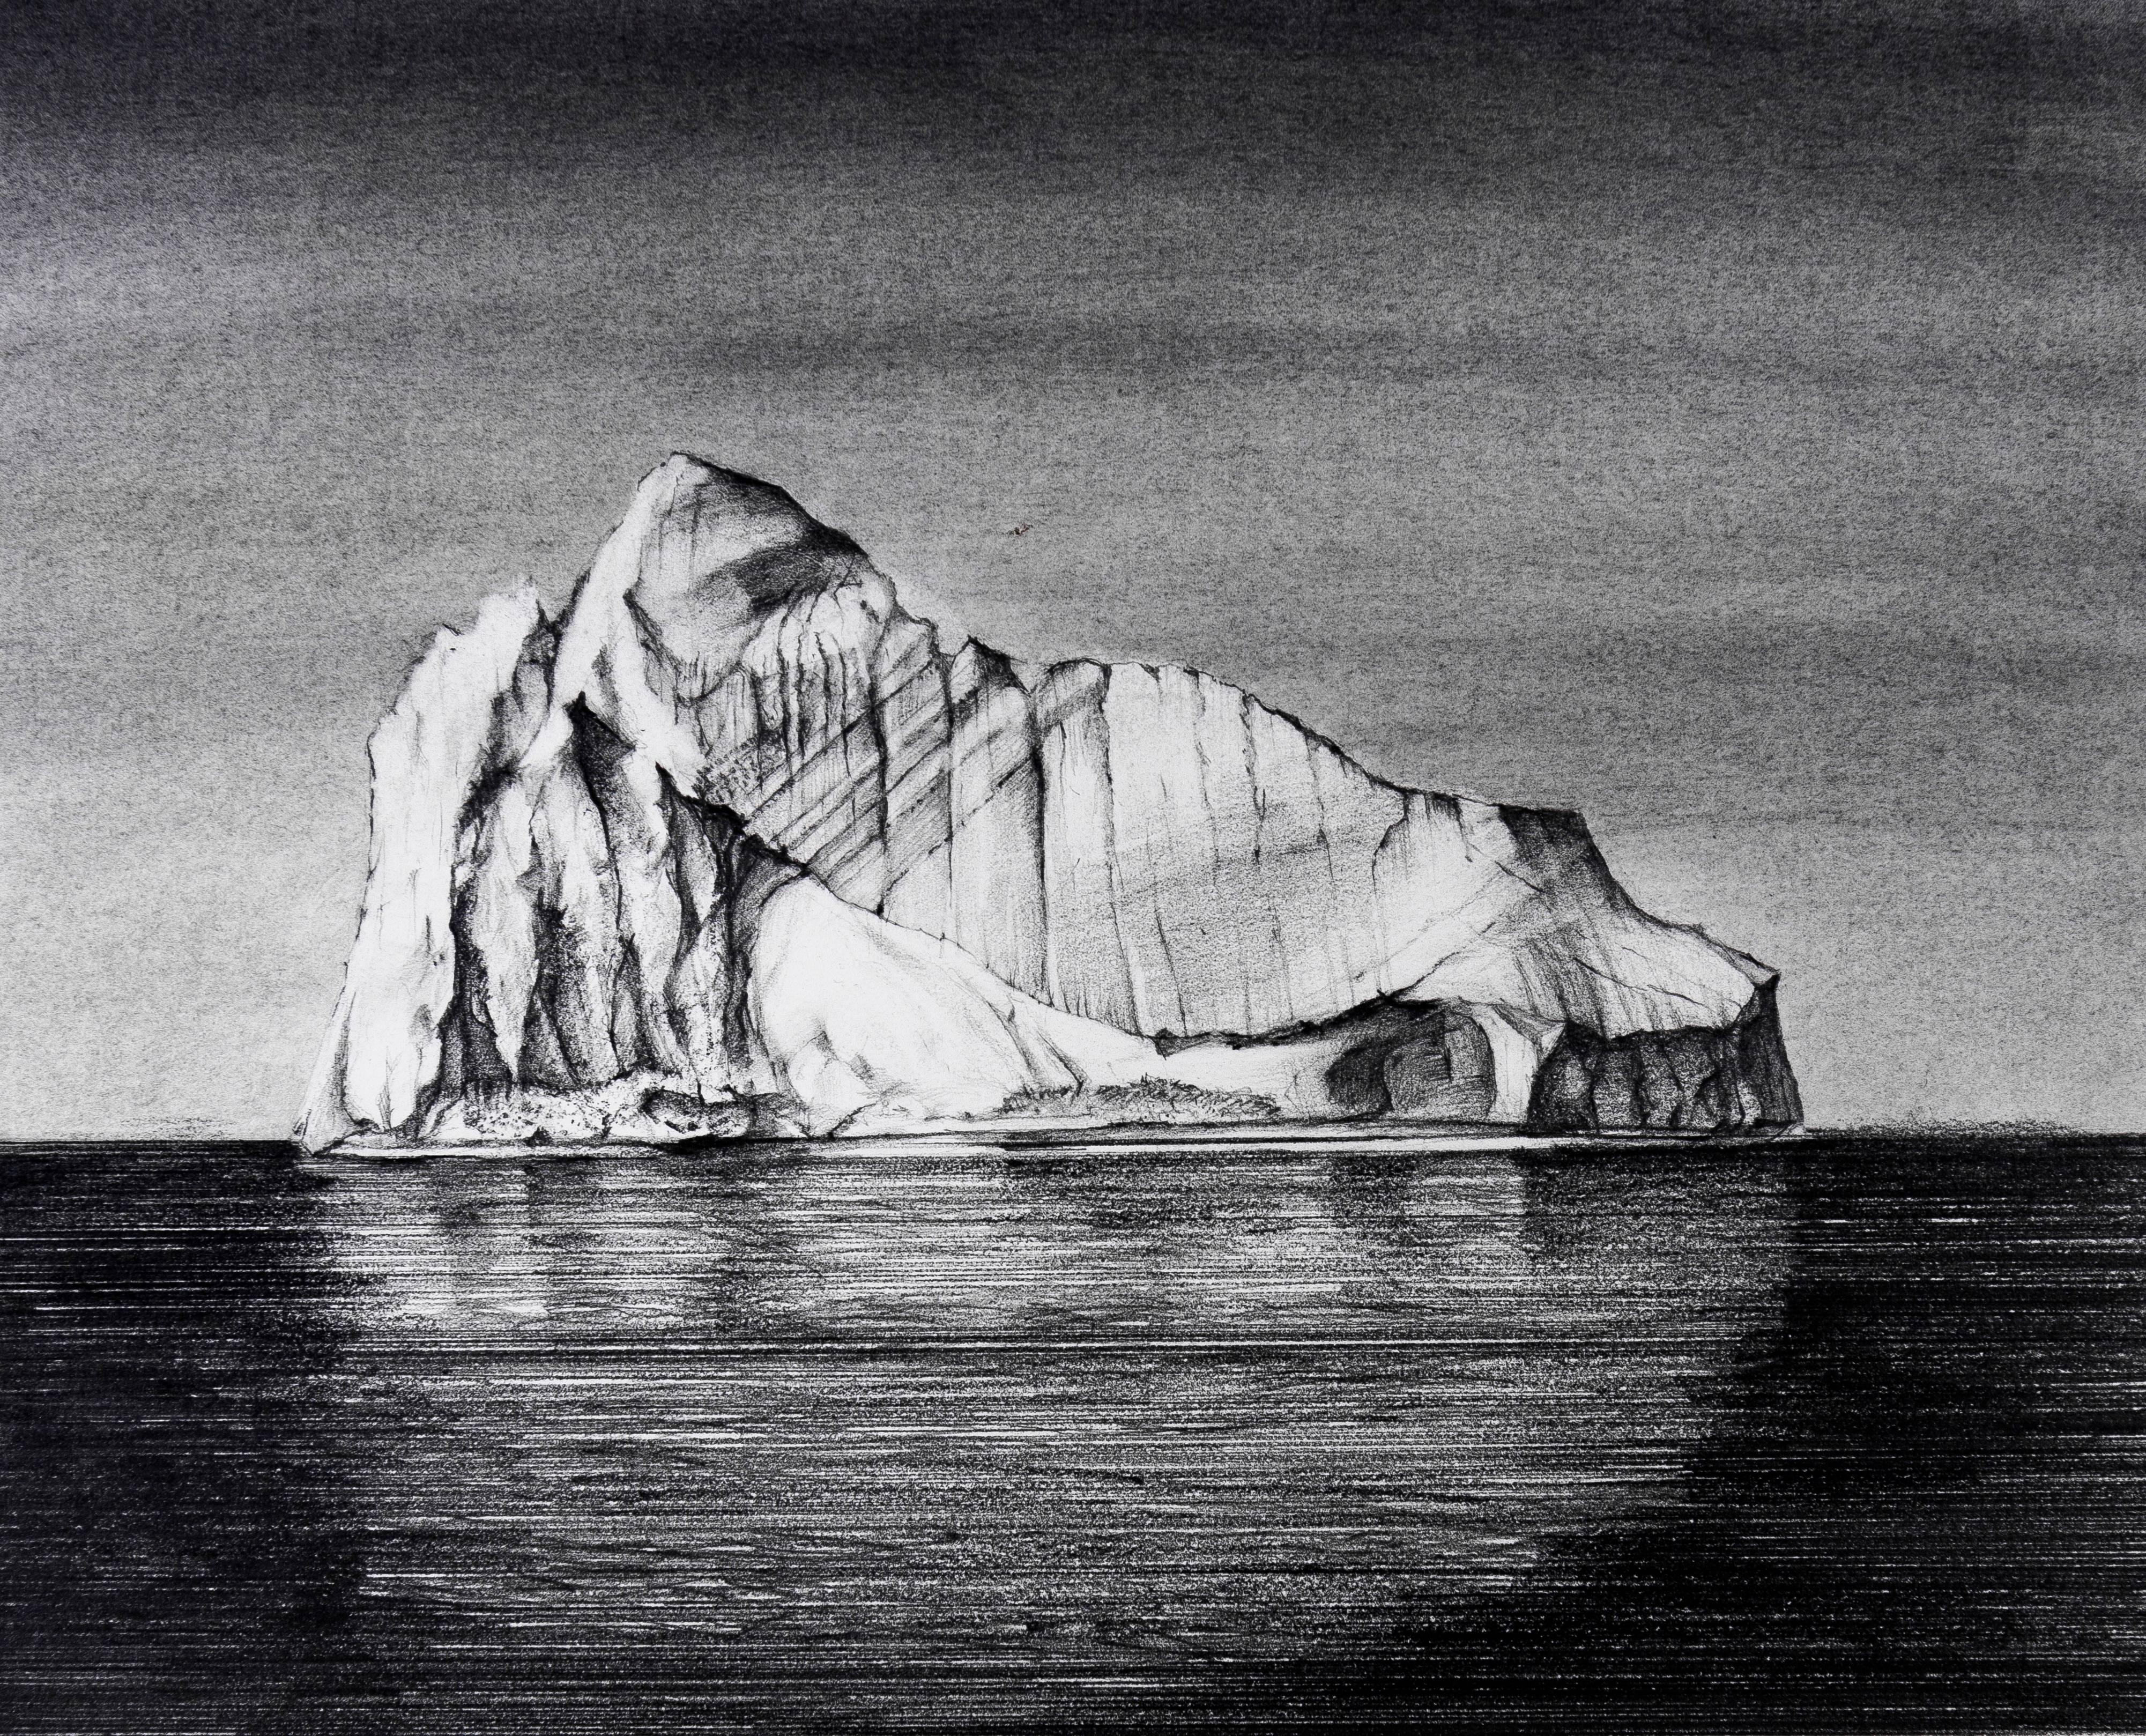 Juan Garcia-Nunez Landscape Art - Iceberg Drawing 1: Black and White Landscape Drawing of Iceberg in Water, Framed